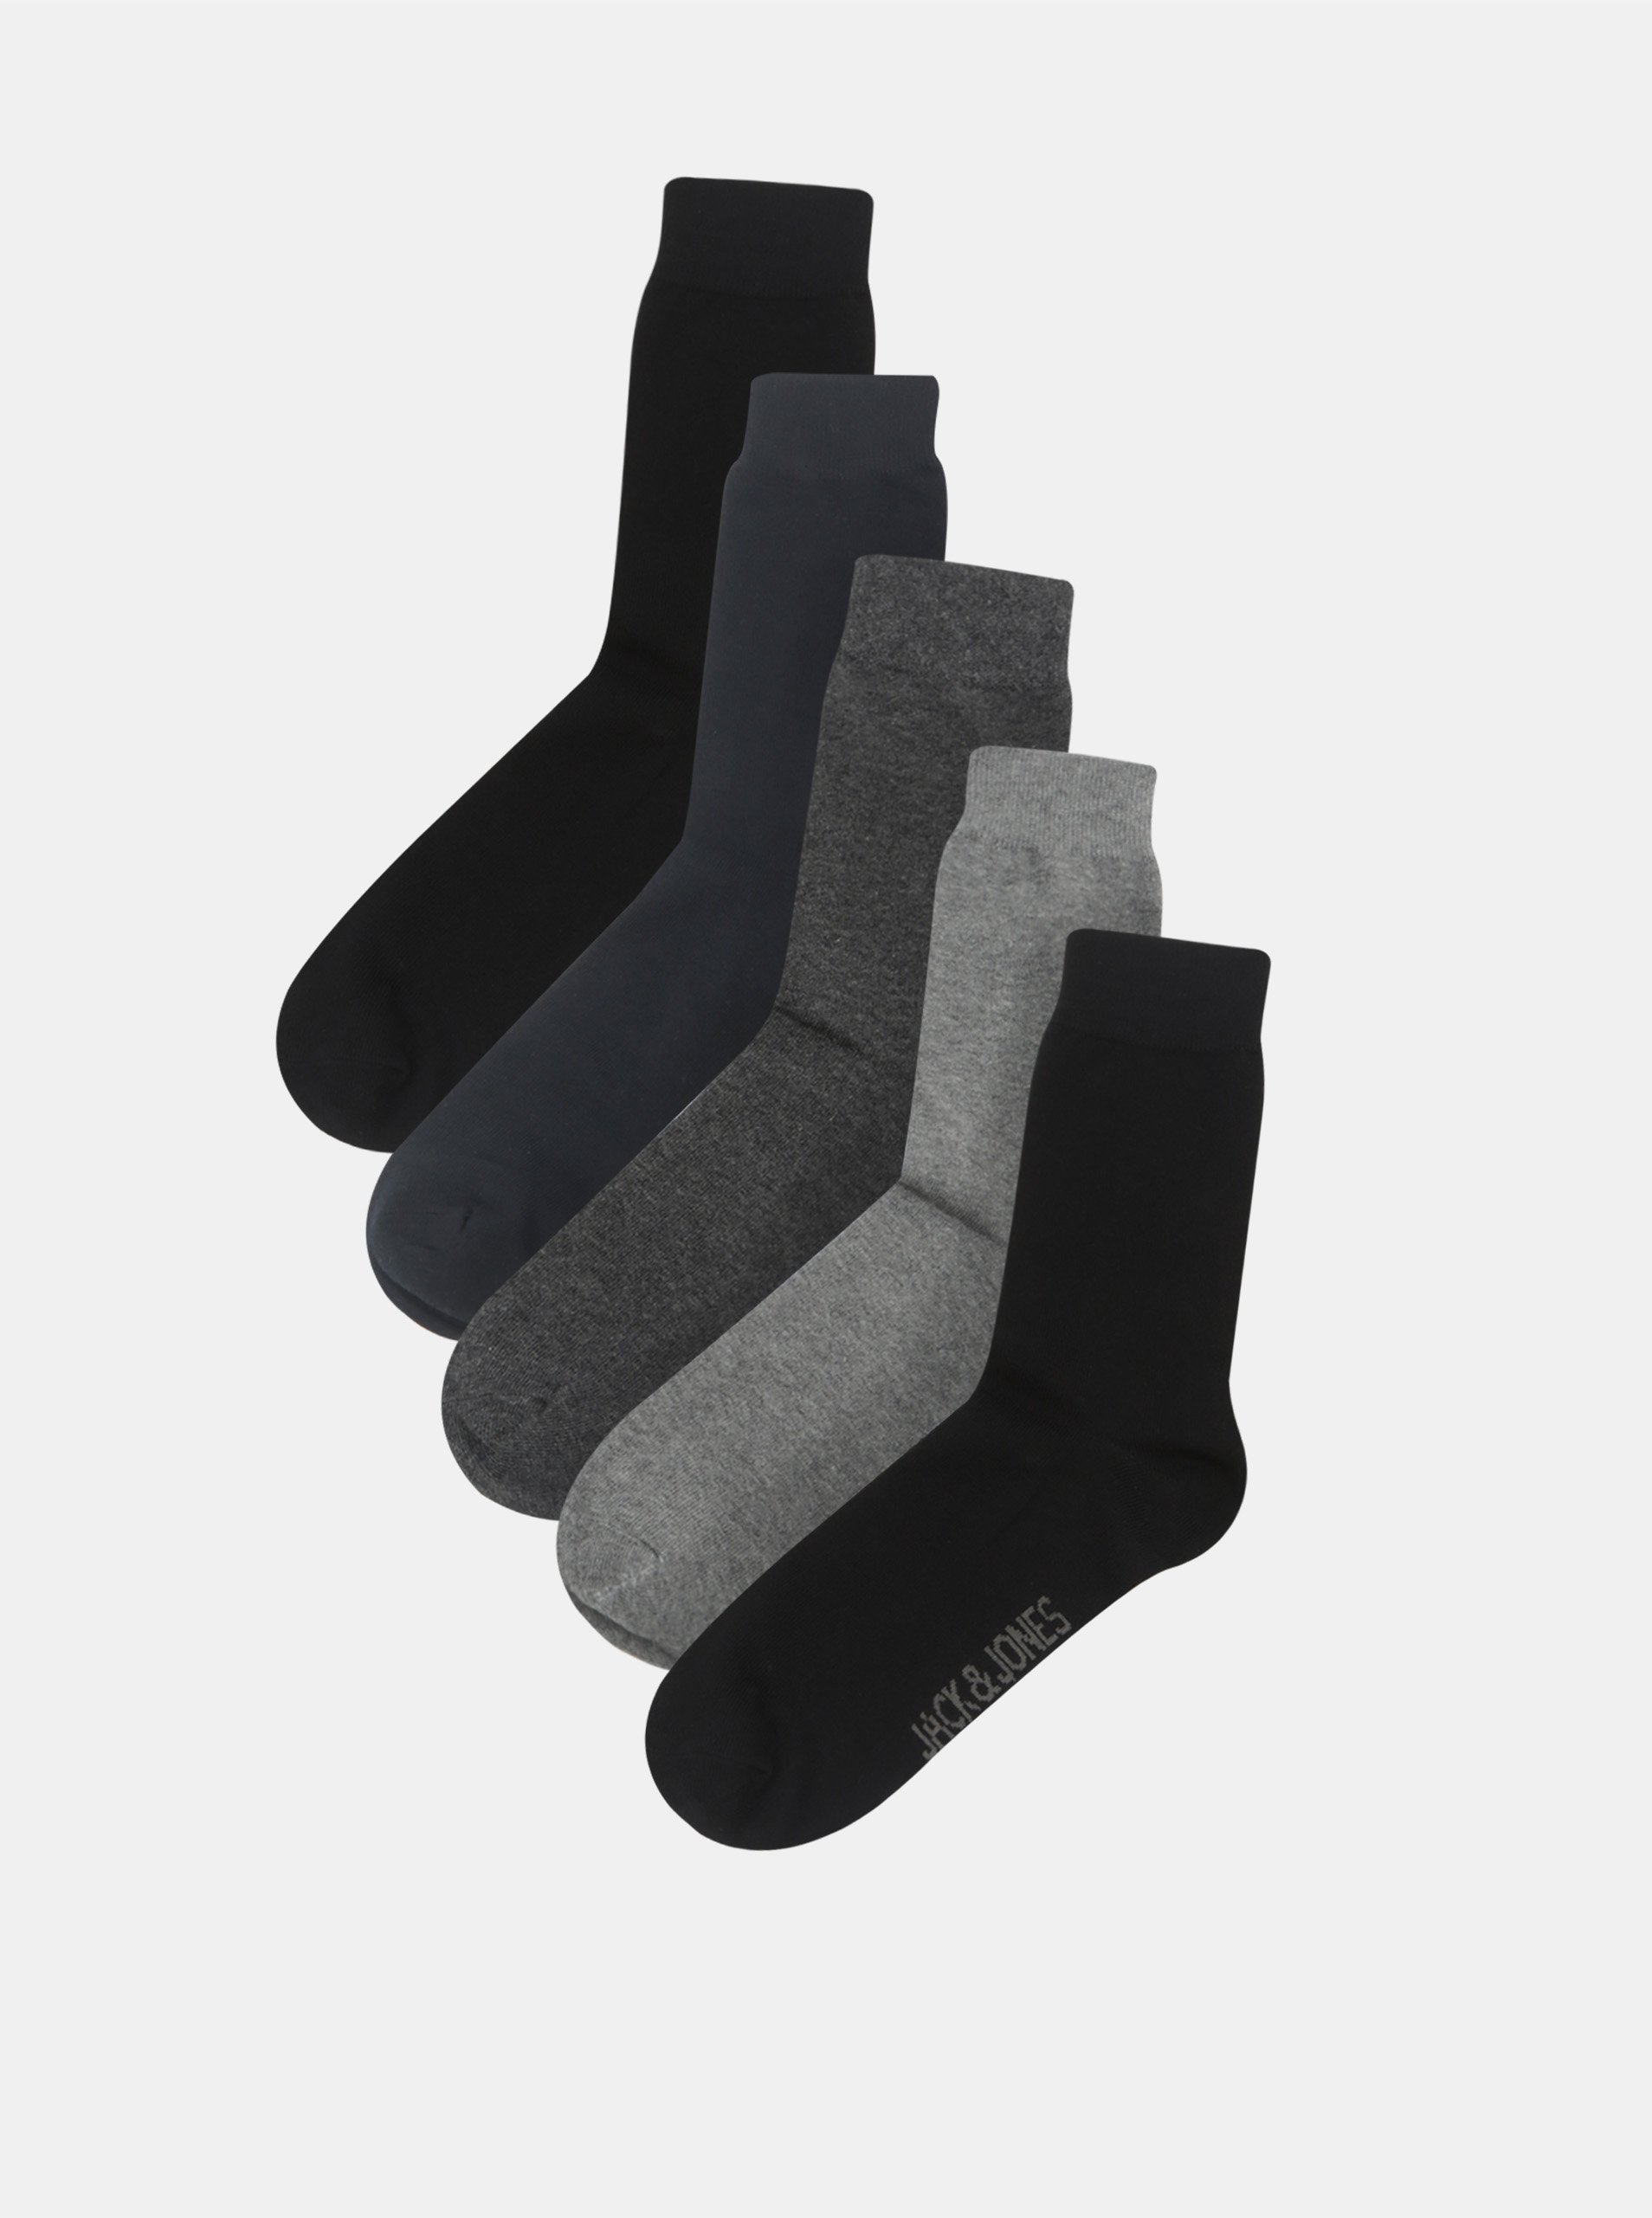 Jack & Jones Set of five pairs of men's socks in black, dark blue and grey - Men